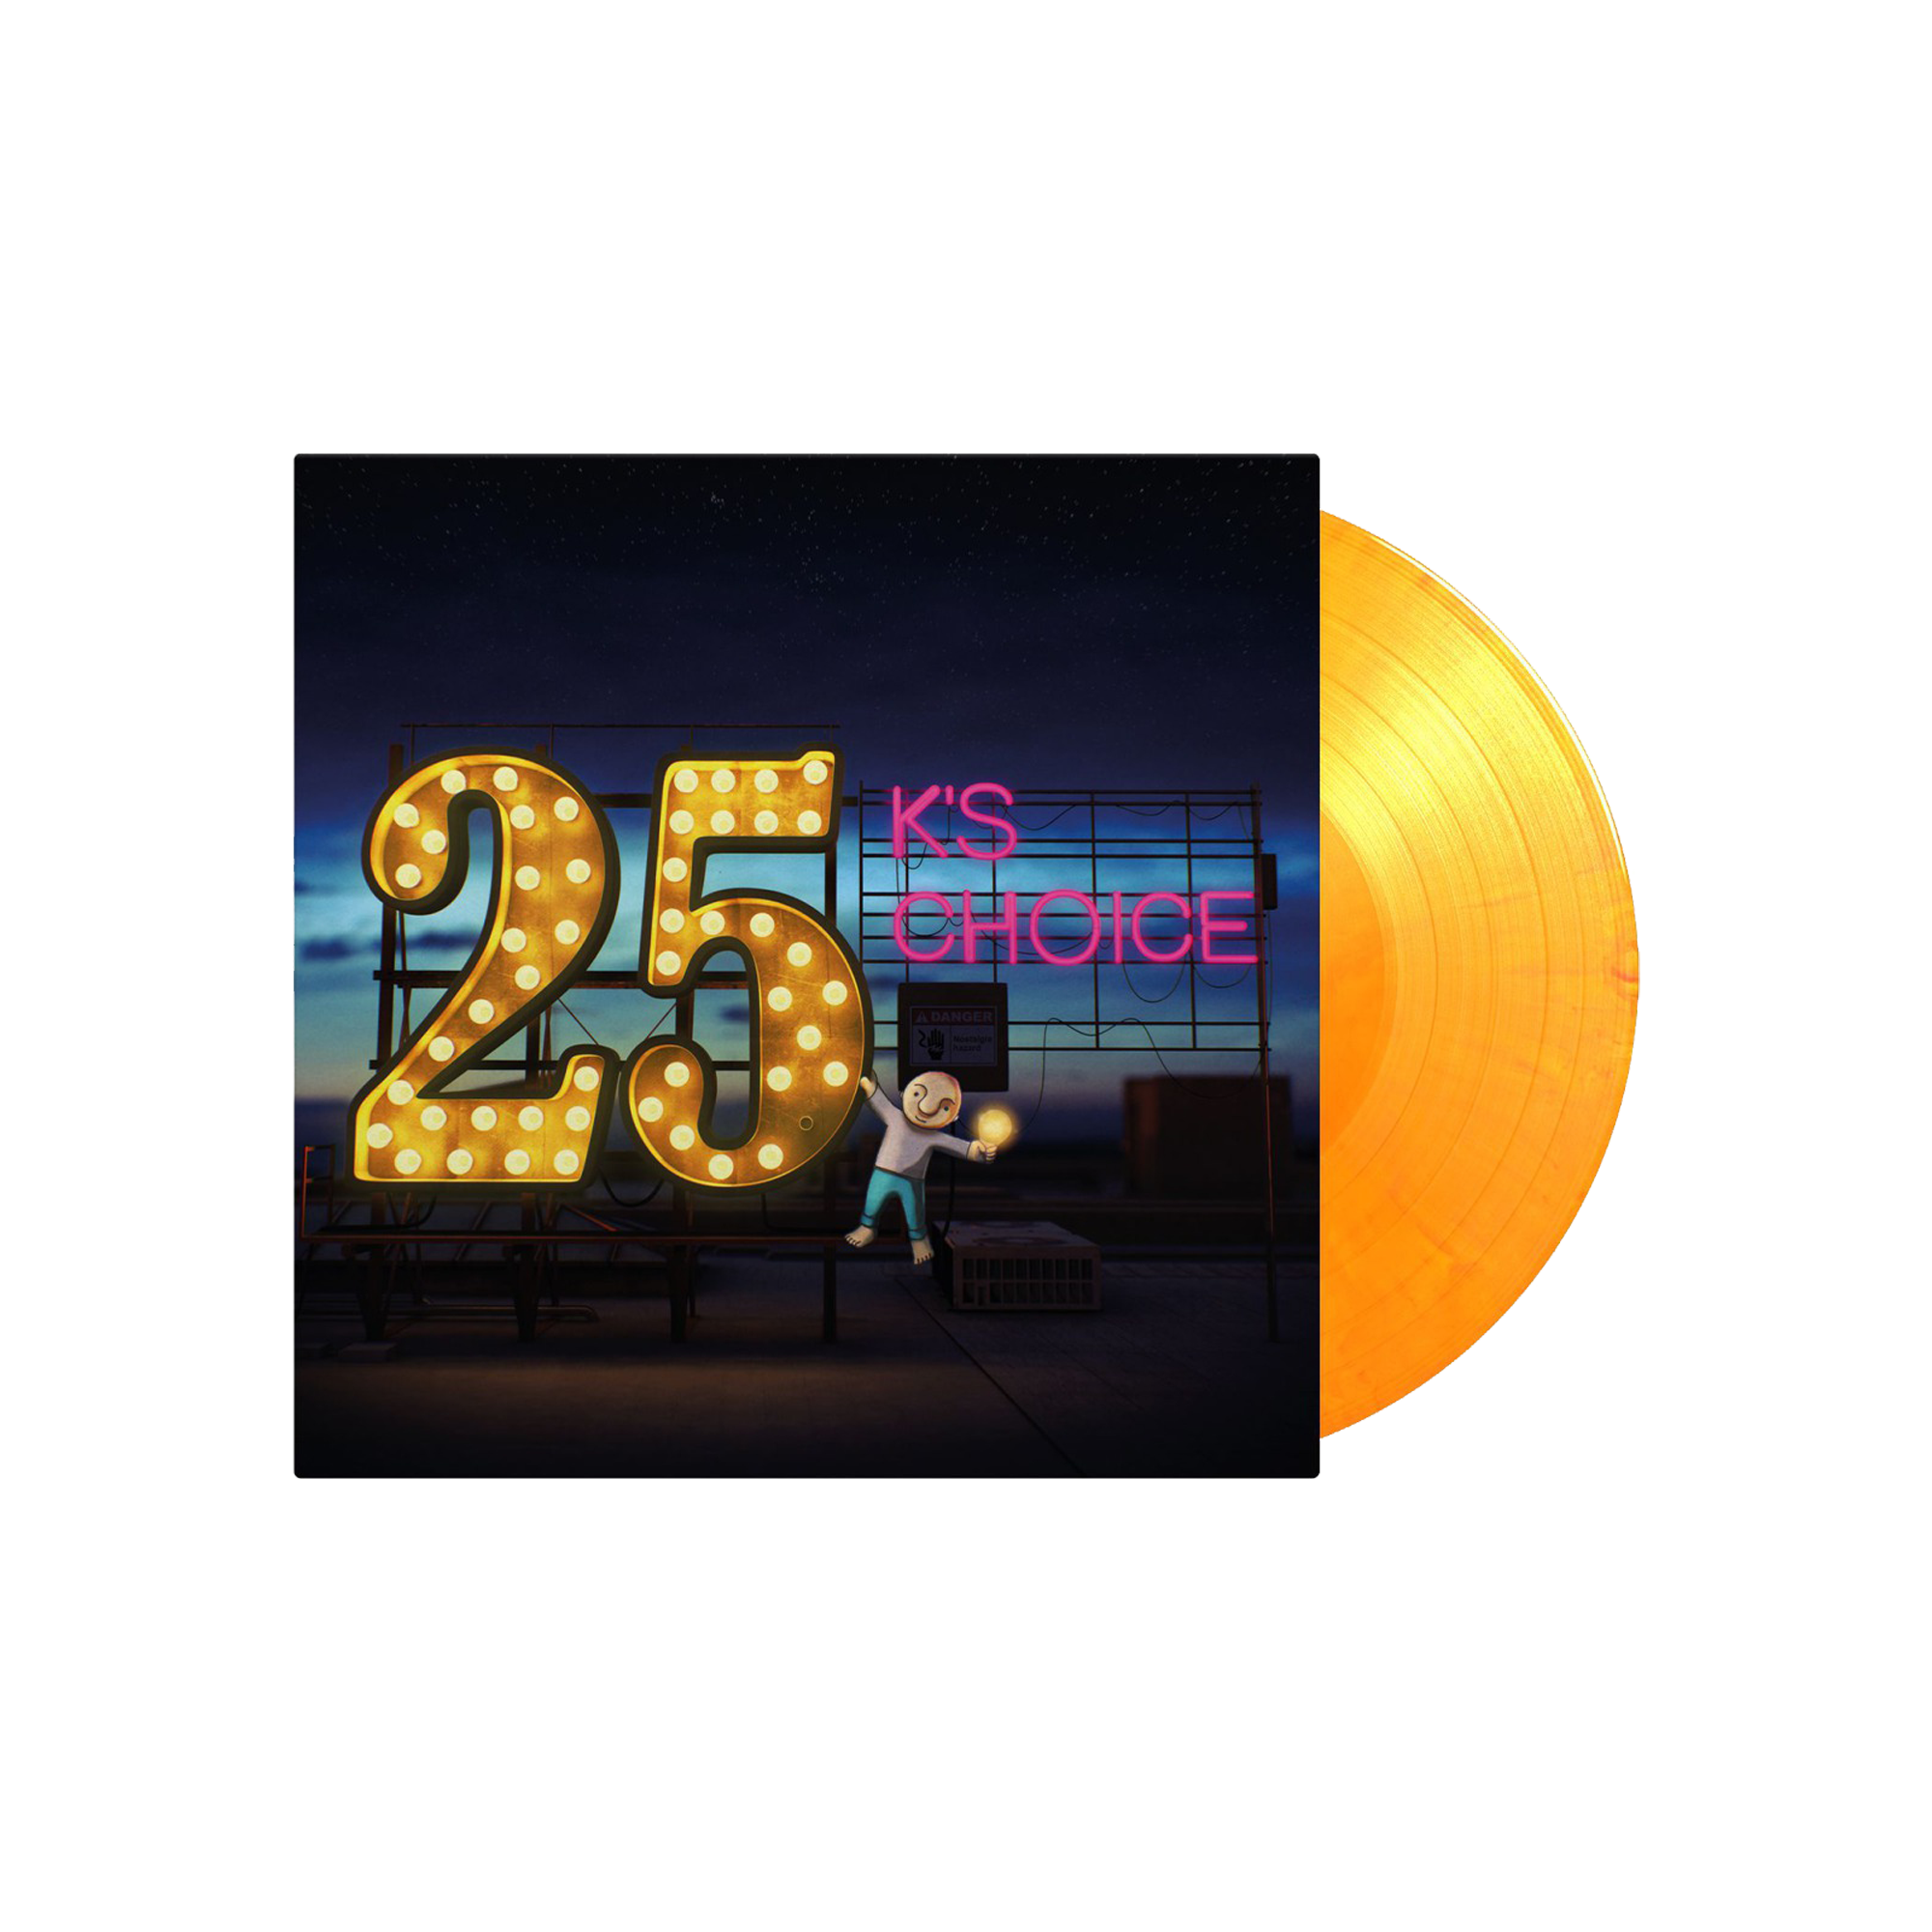 K's Choice - 25: Limited Edition Yellow + Orange Marbled Vinyl 2LP